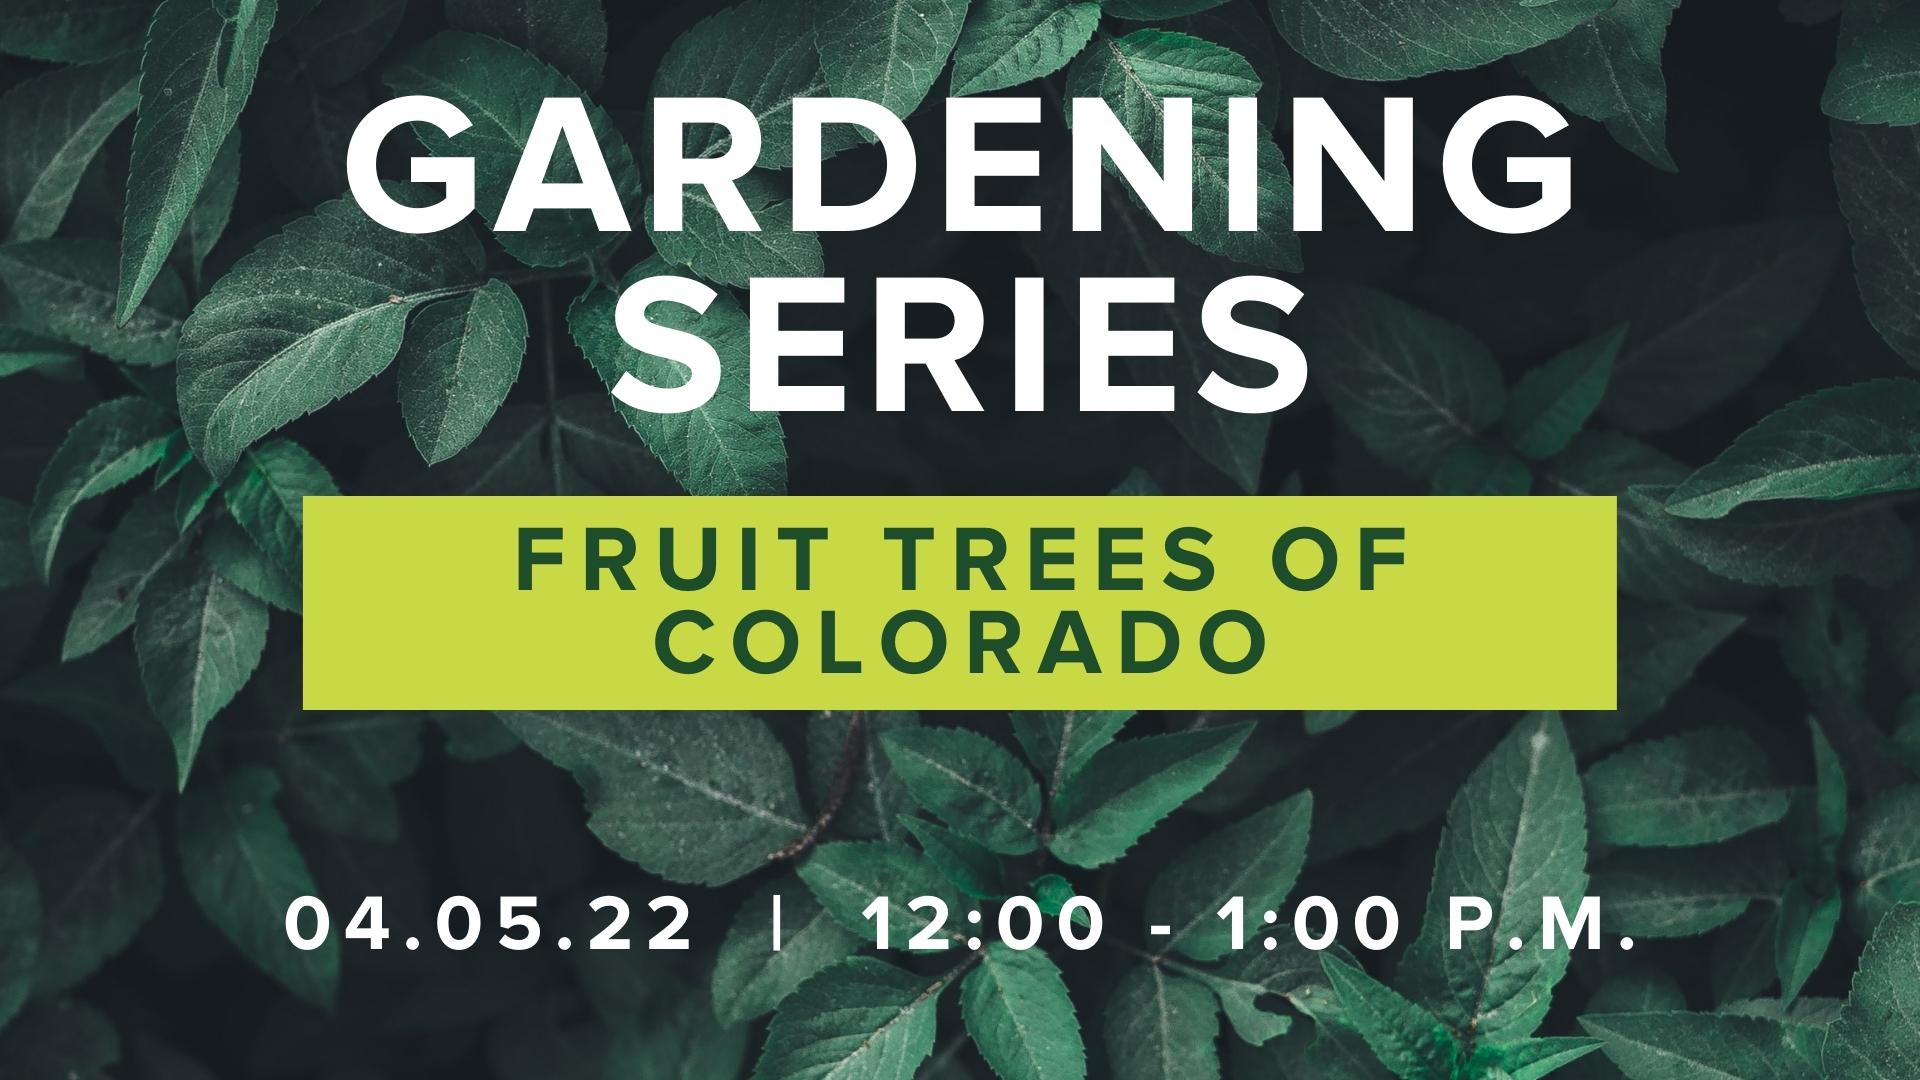 Image for Gardening Series: Fruit Trees of Colorado webinar